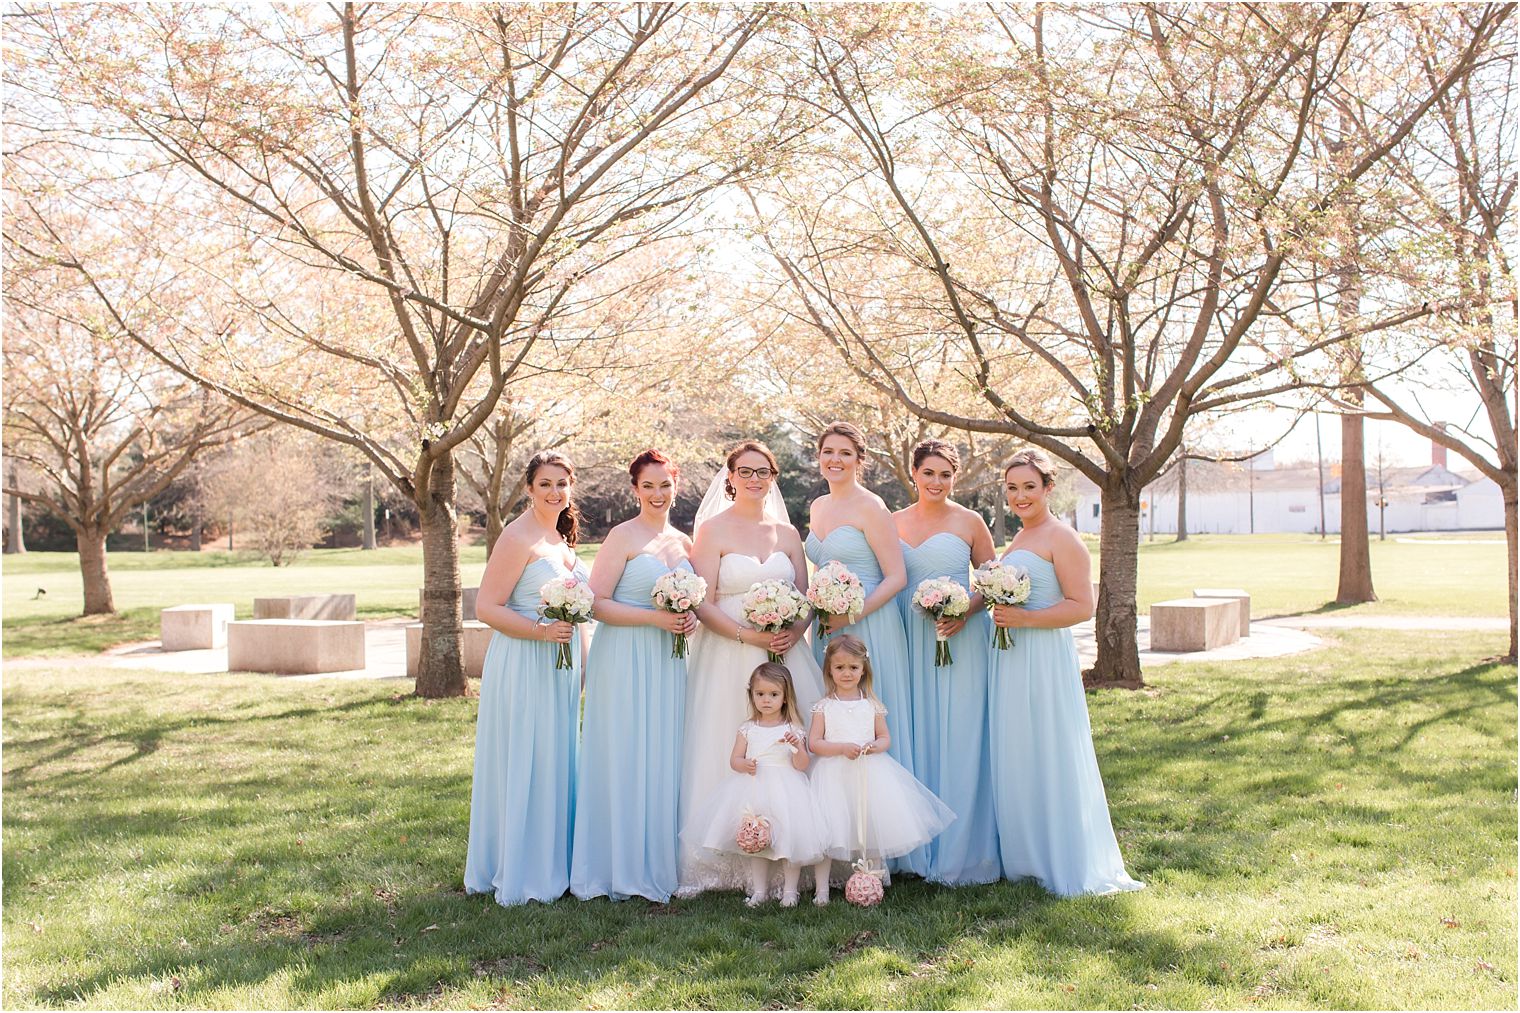 Bill Levkoff bridesmaid dresses in blue